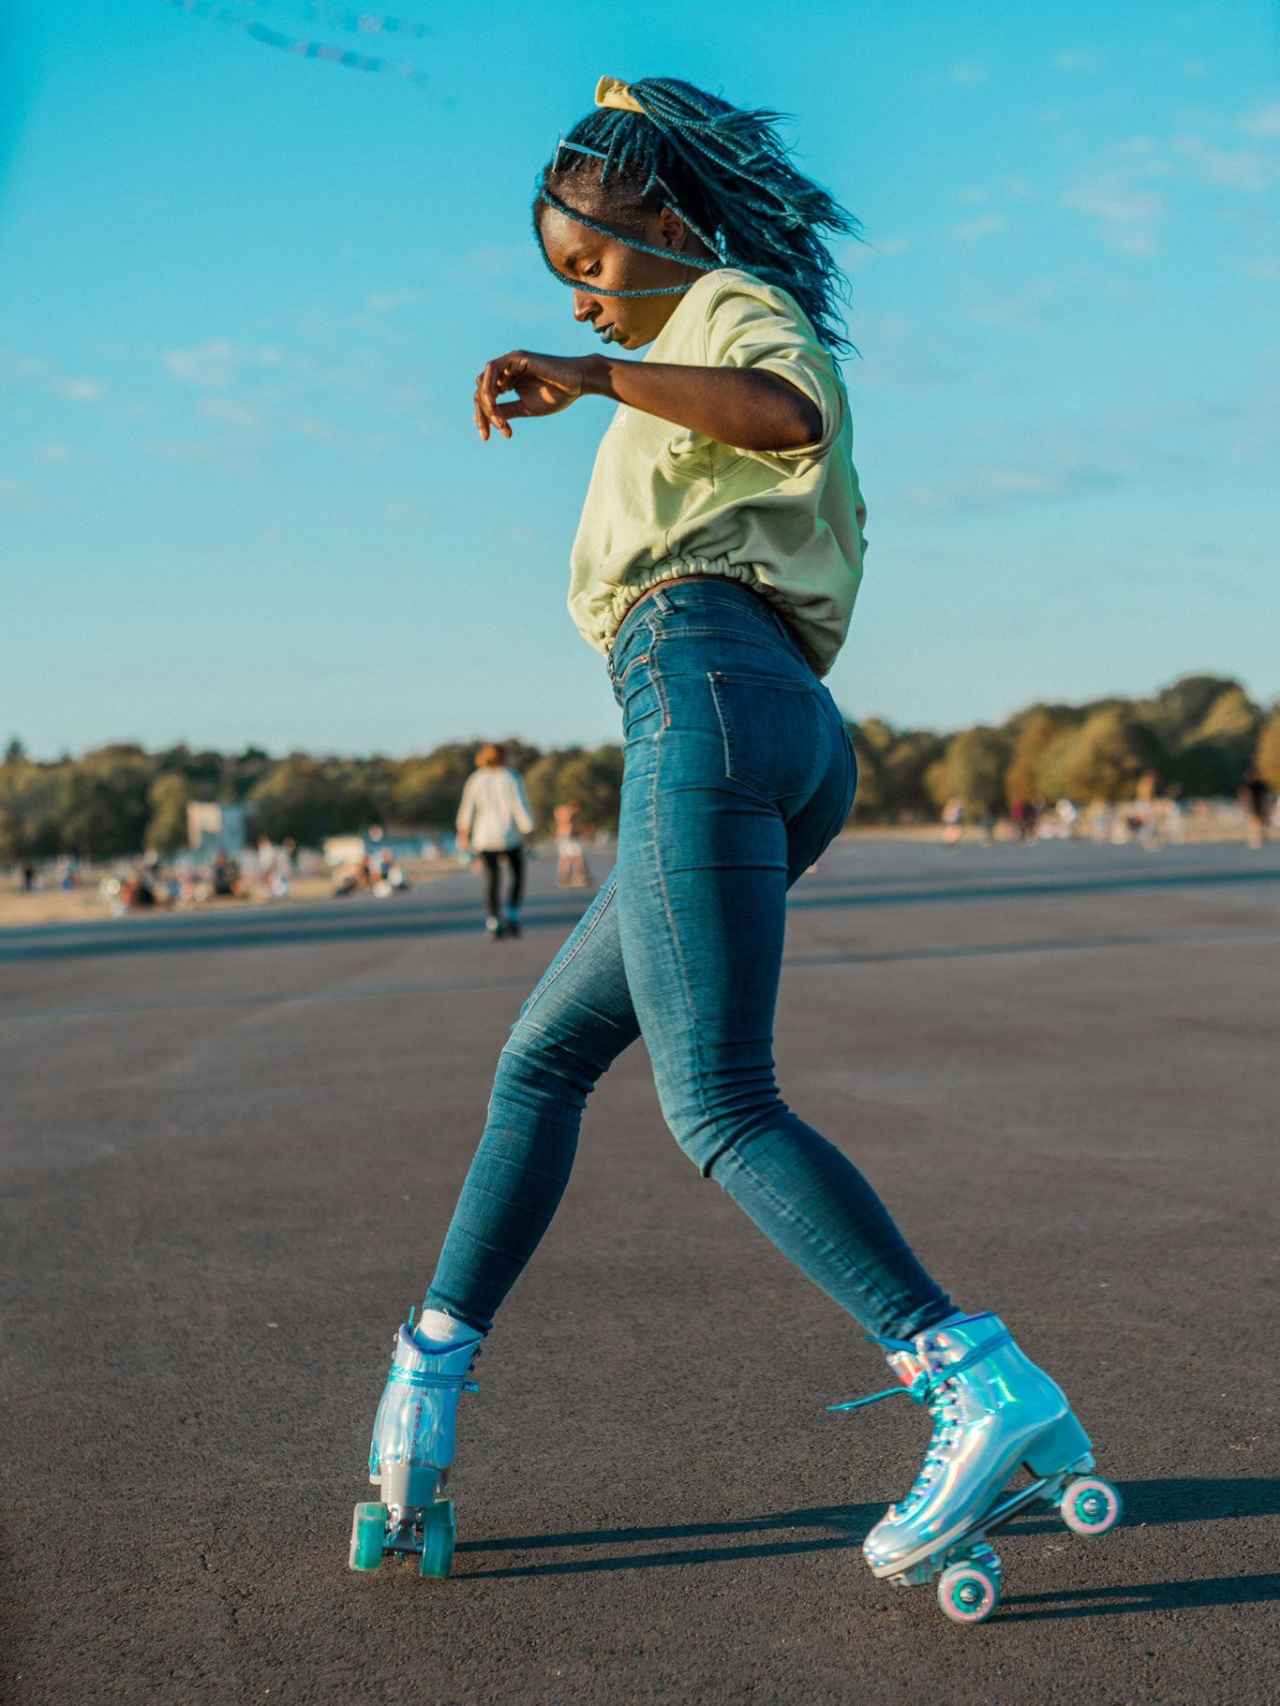 WhatsApp La berlinesa Oumi Janta, la reina del roller skate.